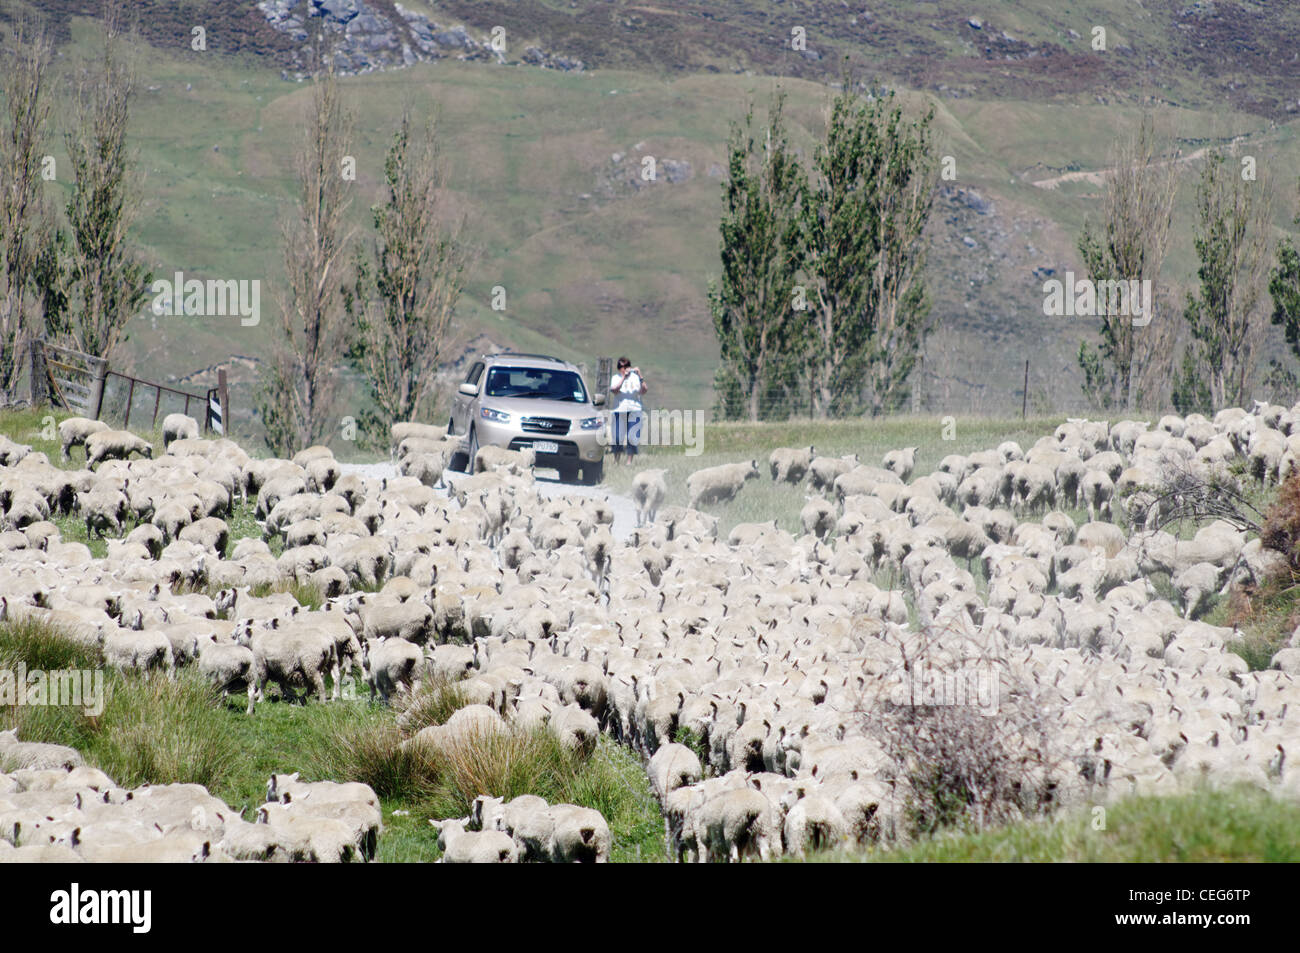 Sheep blocking the road in Mount Aspiring National Park, New Zealand Stock Photo